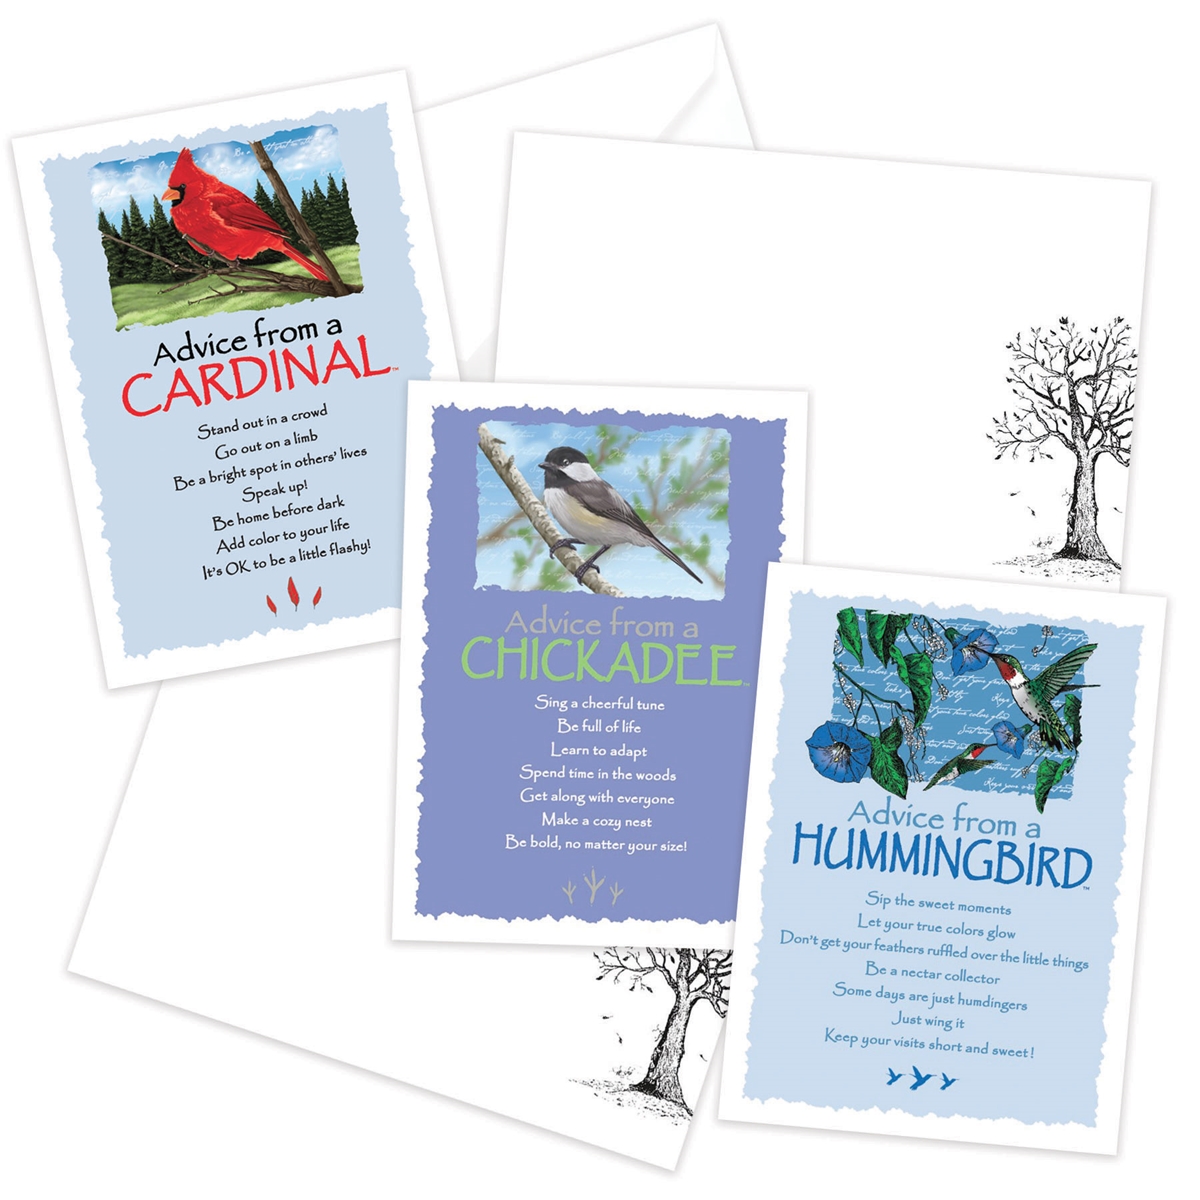 Advice from the Cardinal, Chickadee and Hummingbird Greeting Cards